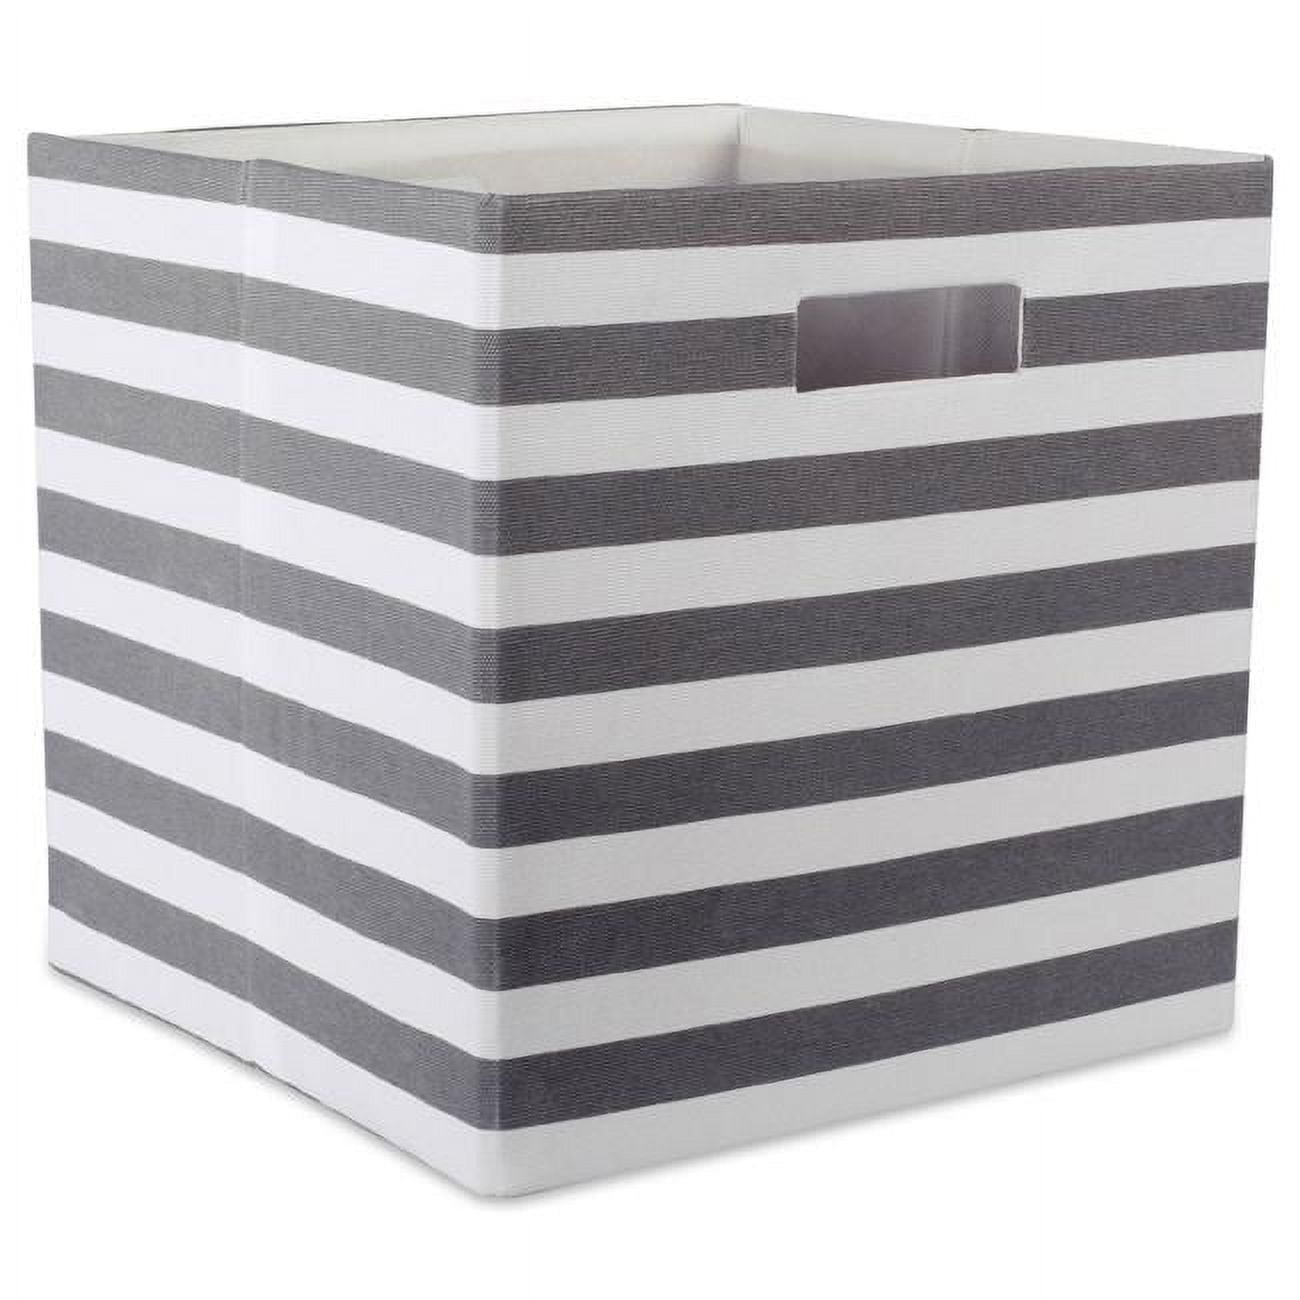 Design Imports Camz37946 13 X 13 X 13 In. Stripe Square Polyester Storage Cube, Grey